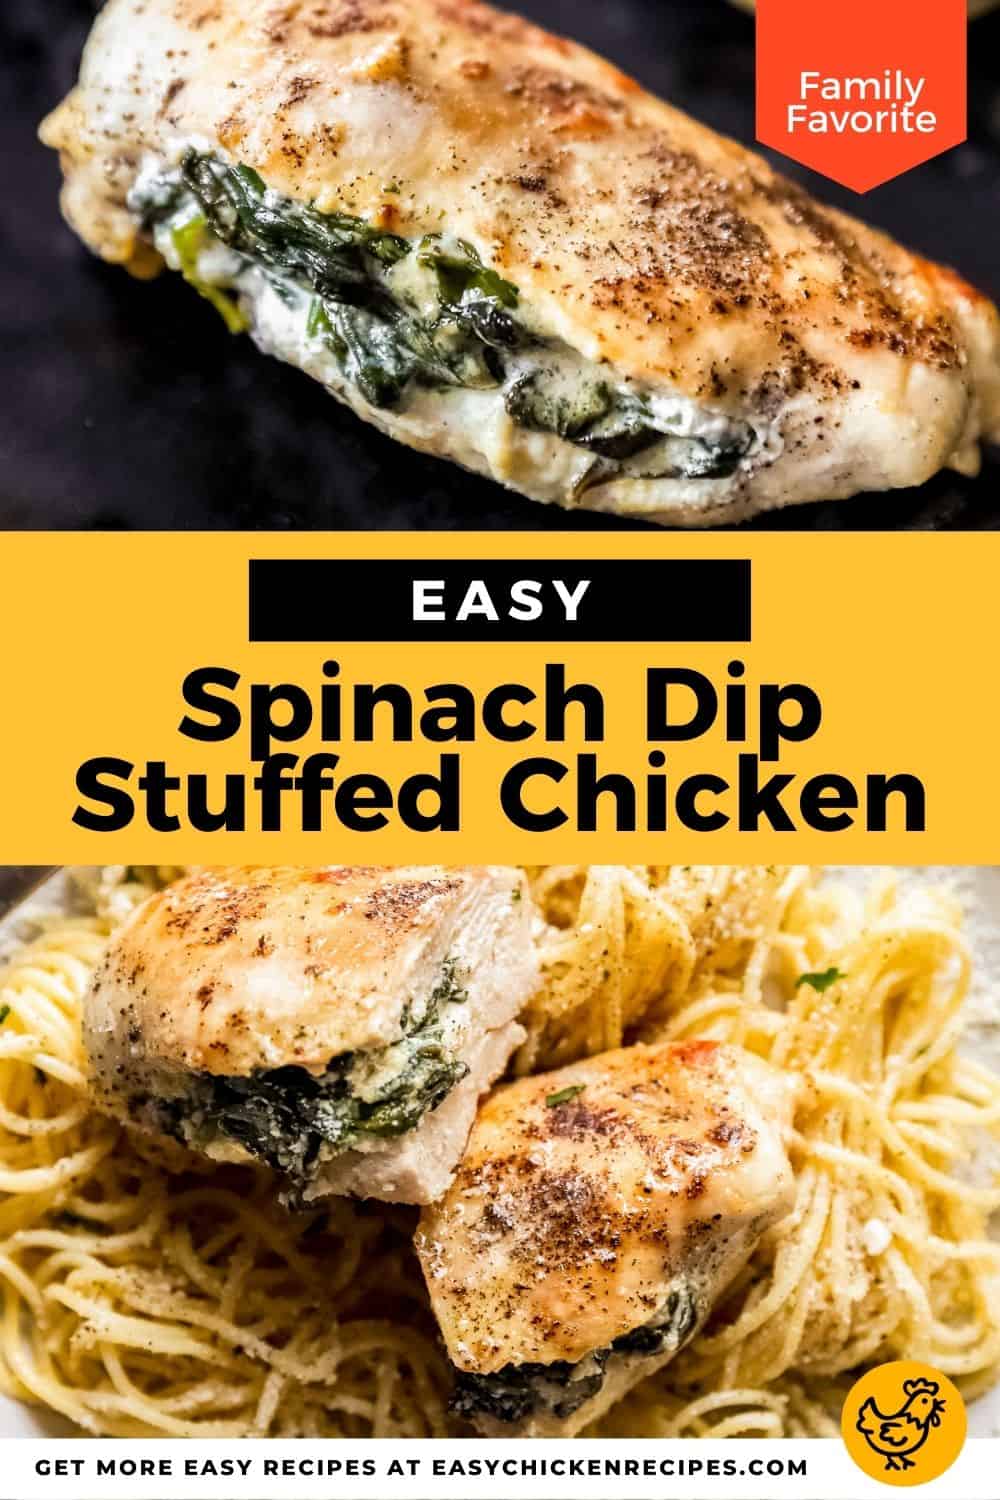 Spinach Stuffed Chicken Breast Recipe - Easy Chicken Recipes (VIDEO)